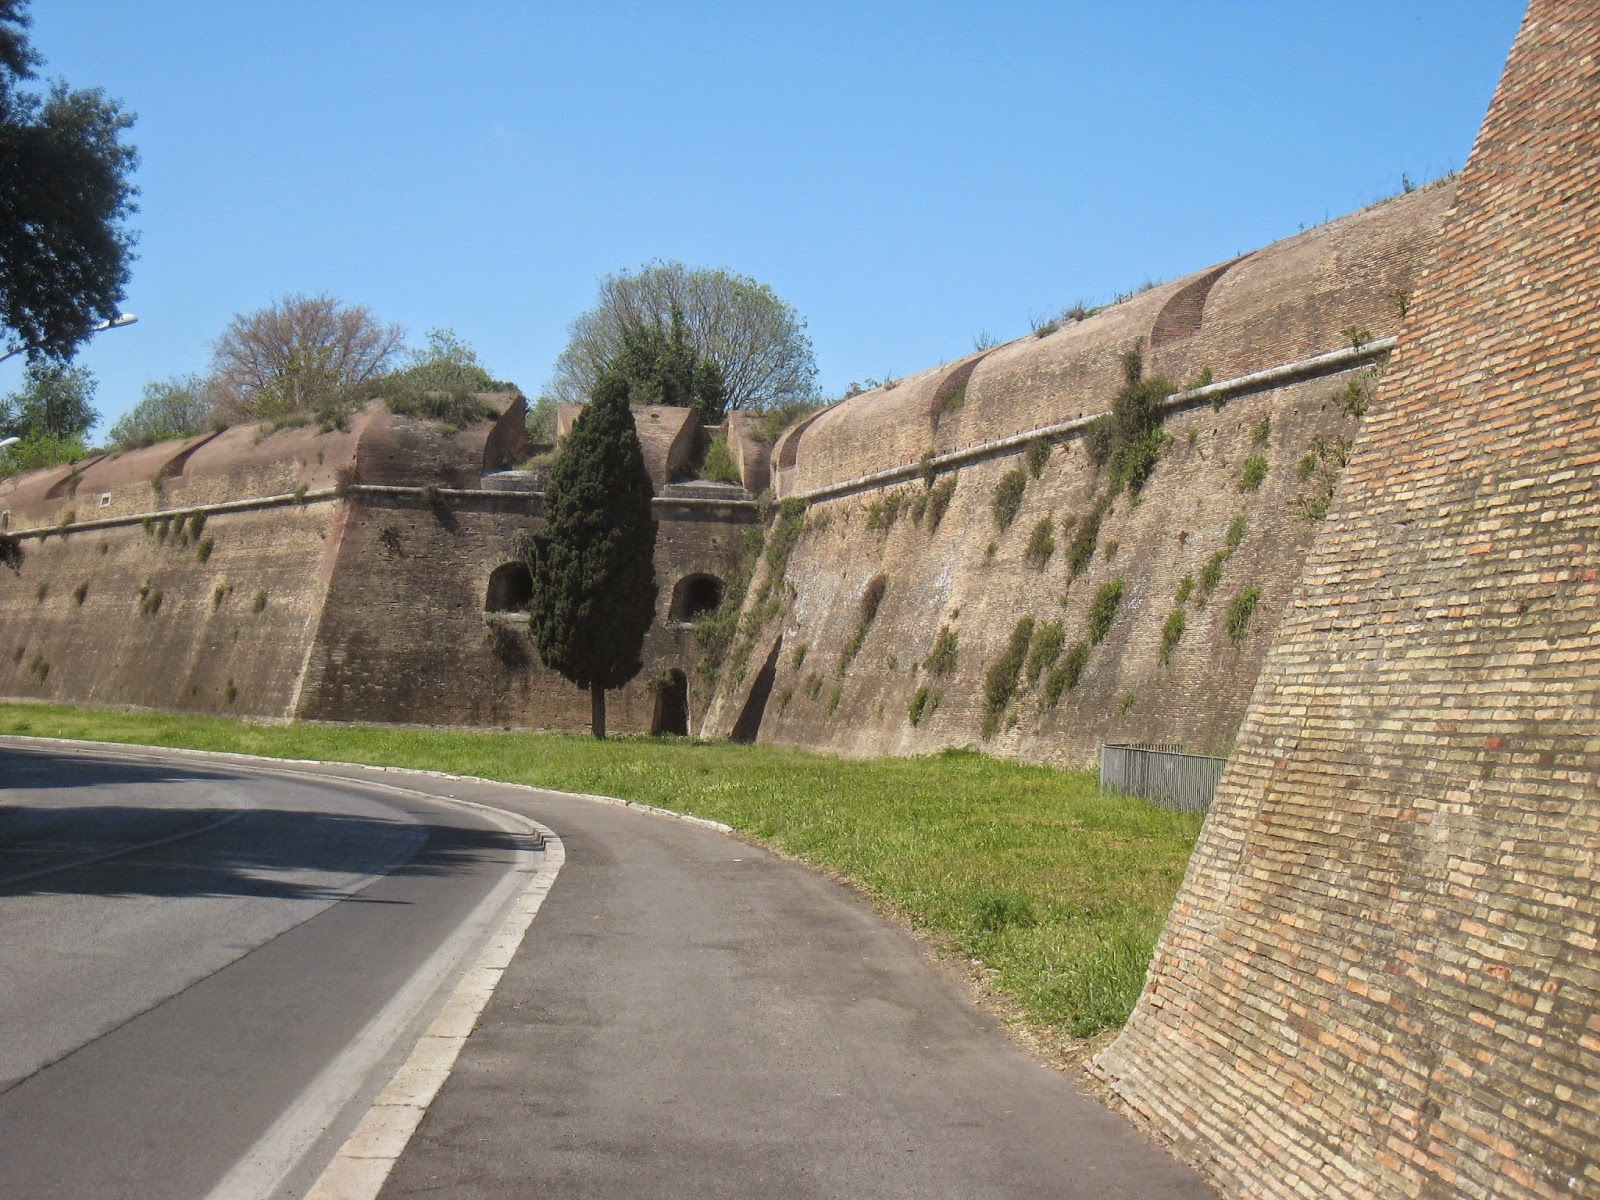 Стены древнего рима. Стена Аврелиана в Риме. Оборонительная стена Аврелиана. Оборонительная стена Рима. Серьвеева стена в Риме.